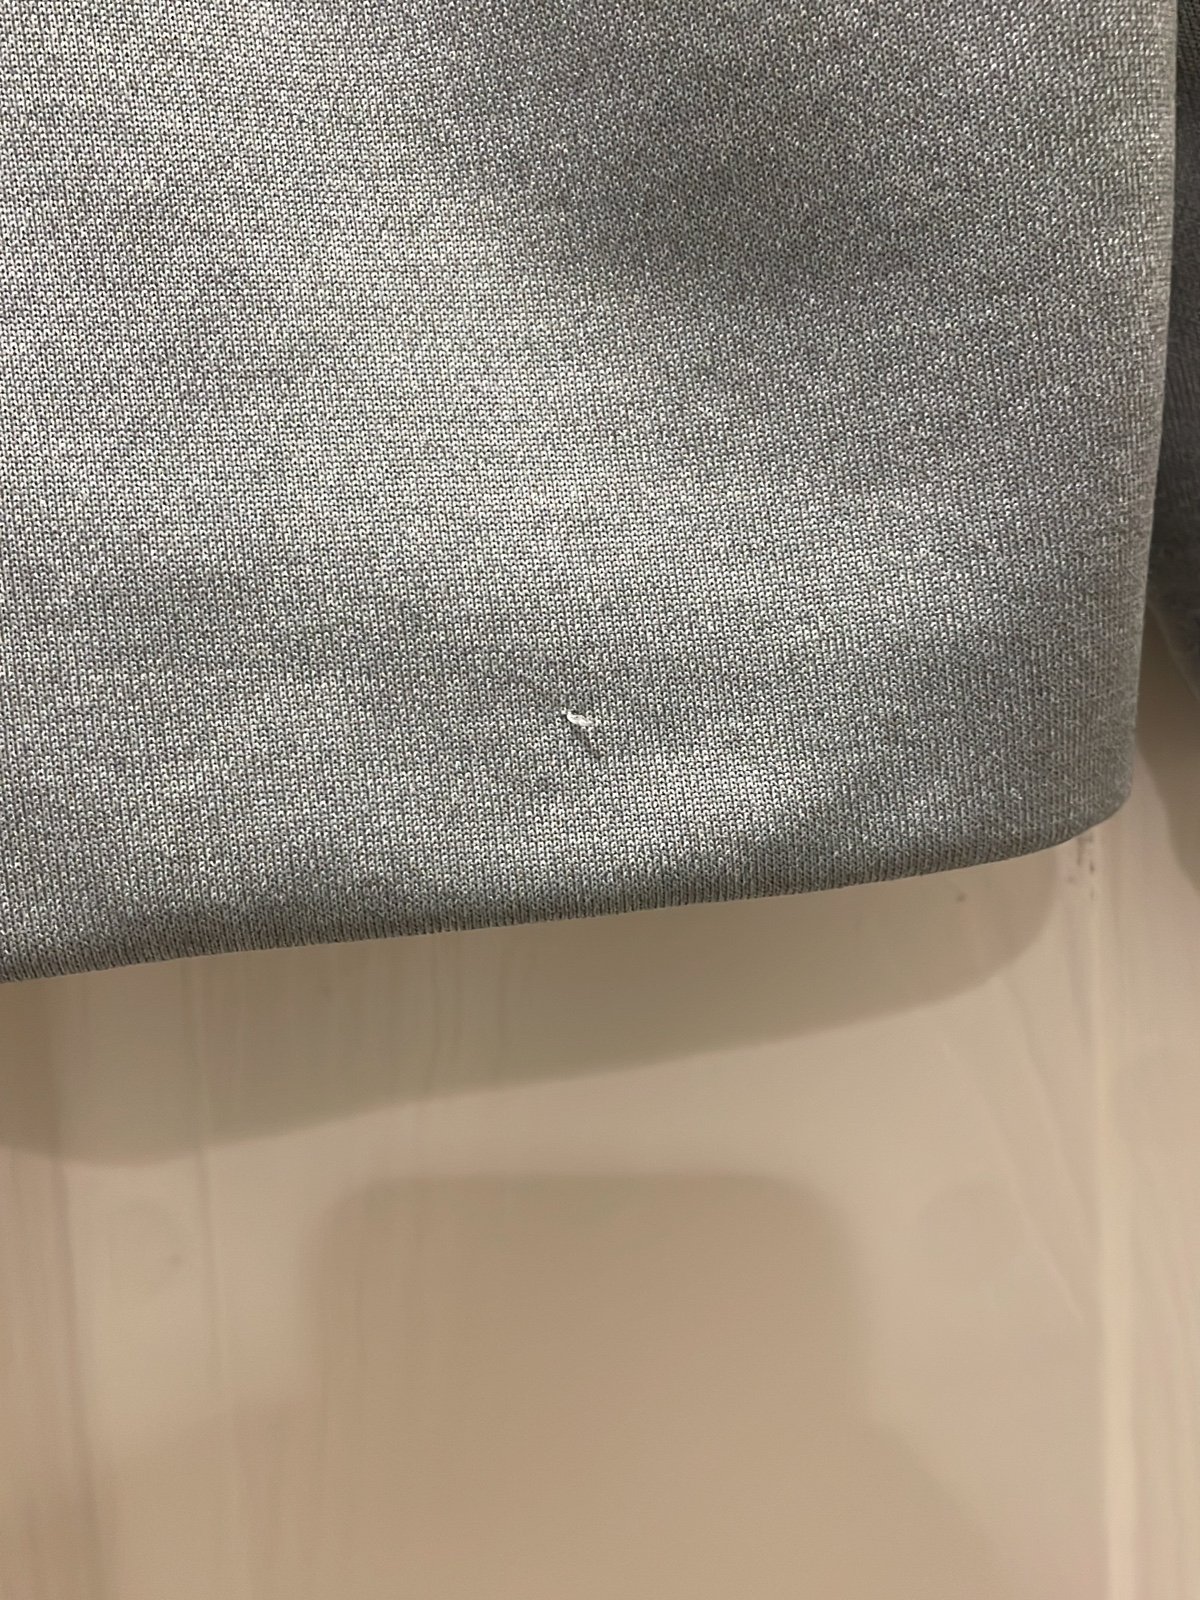 the Lowest price Nike pullover sweatshirt Ip50qDFtA US Outlet